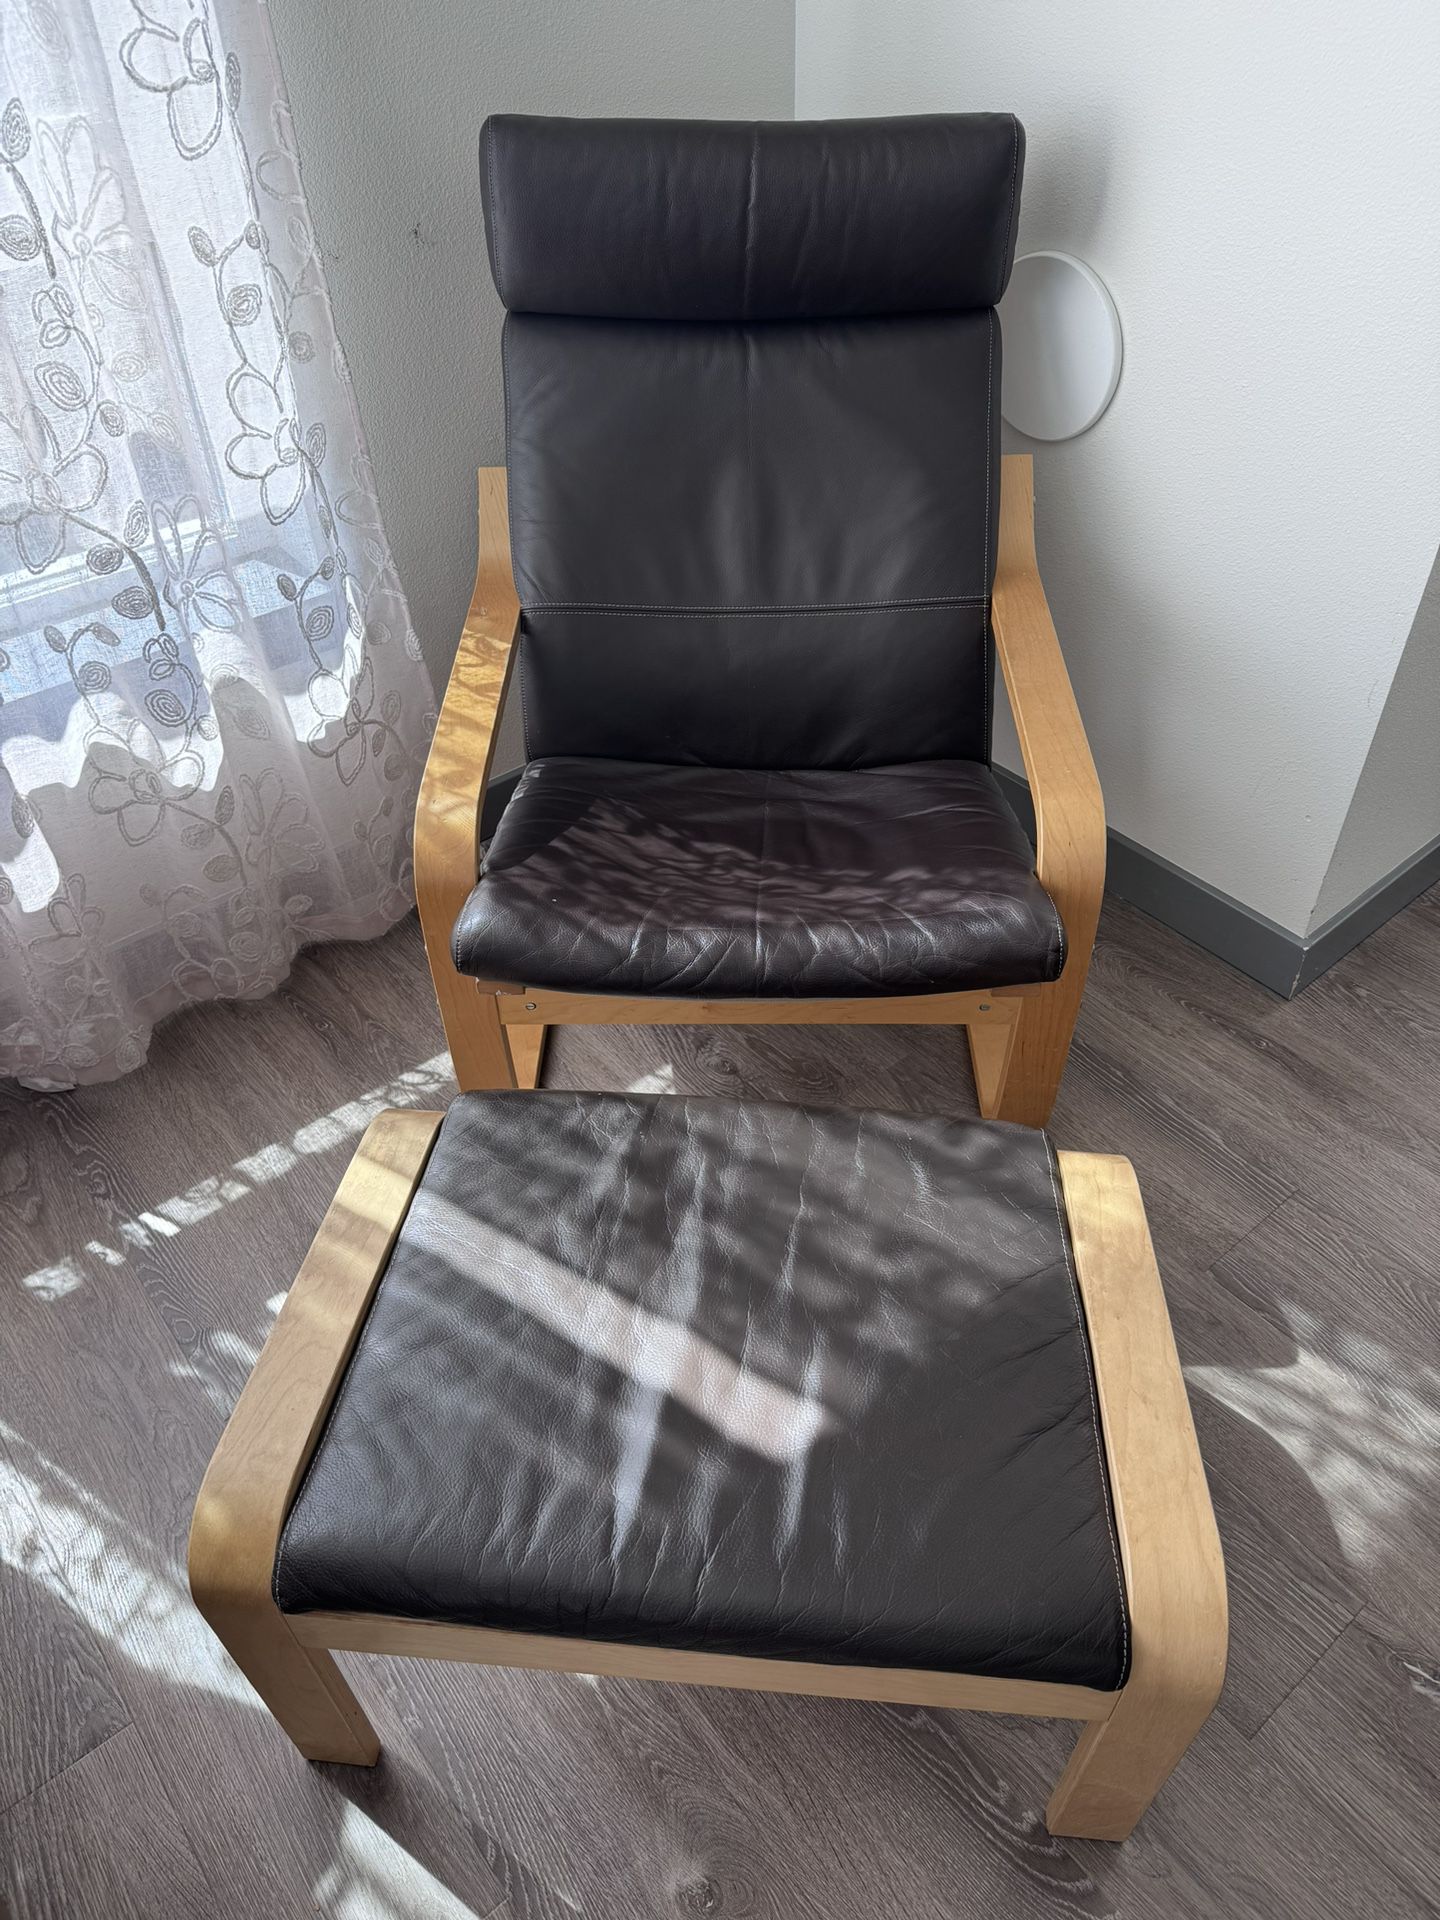 IKEA Chair with Ottoman 